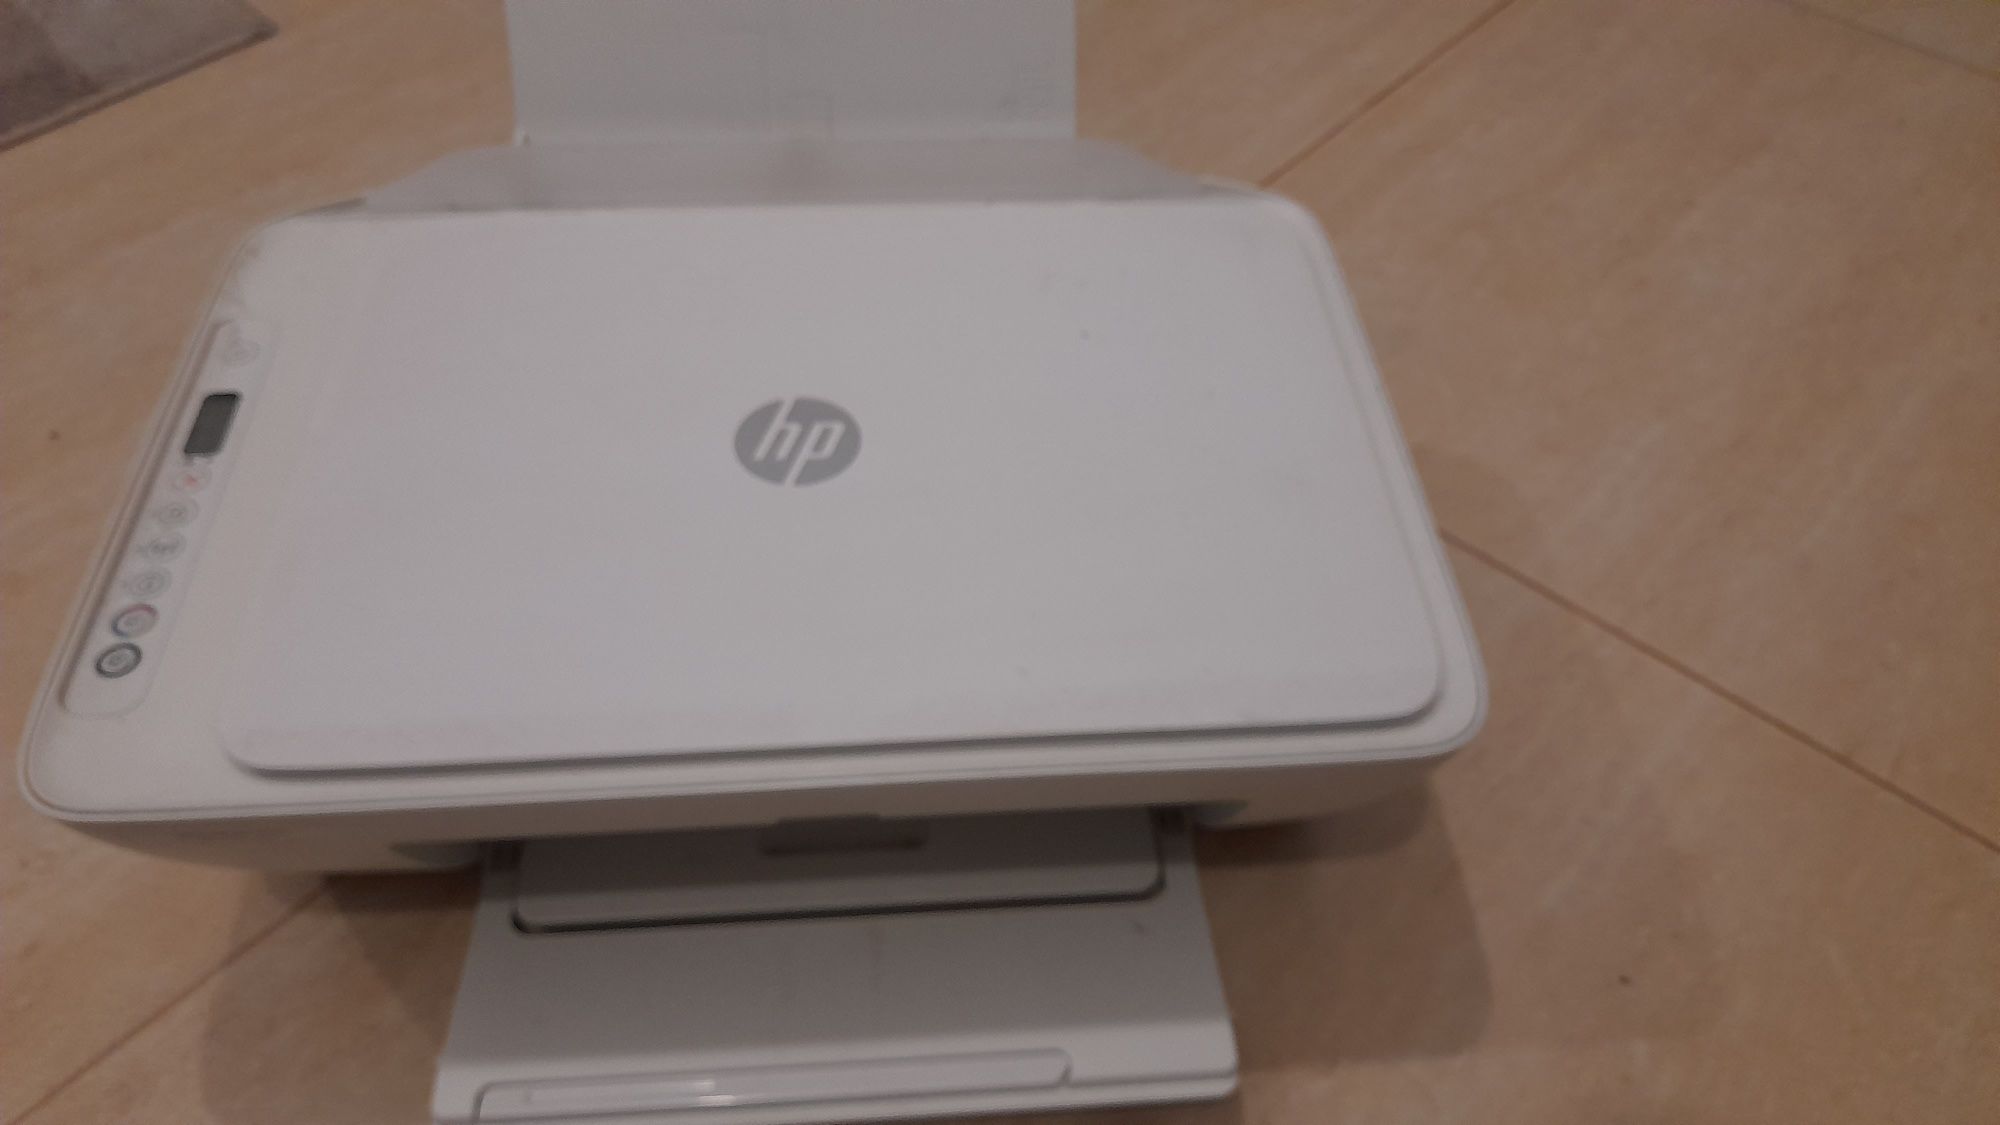 Sprzedam drukarkę HP DeskJet 2620